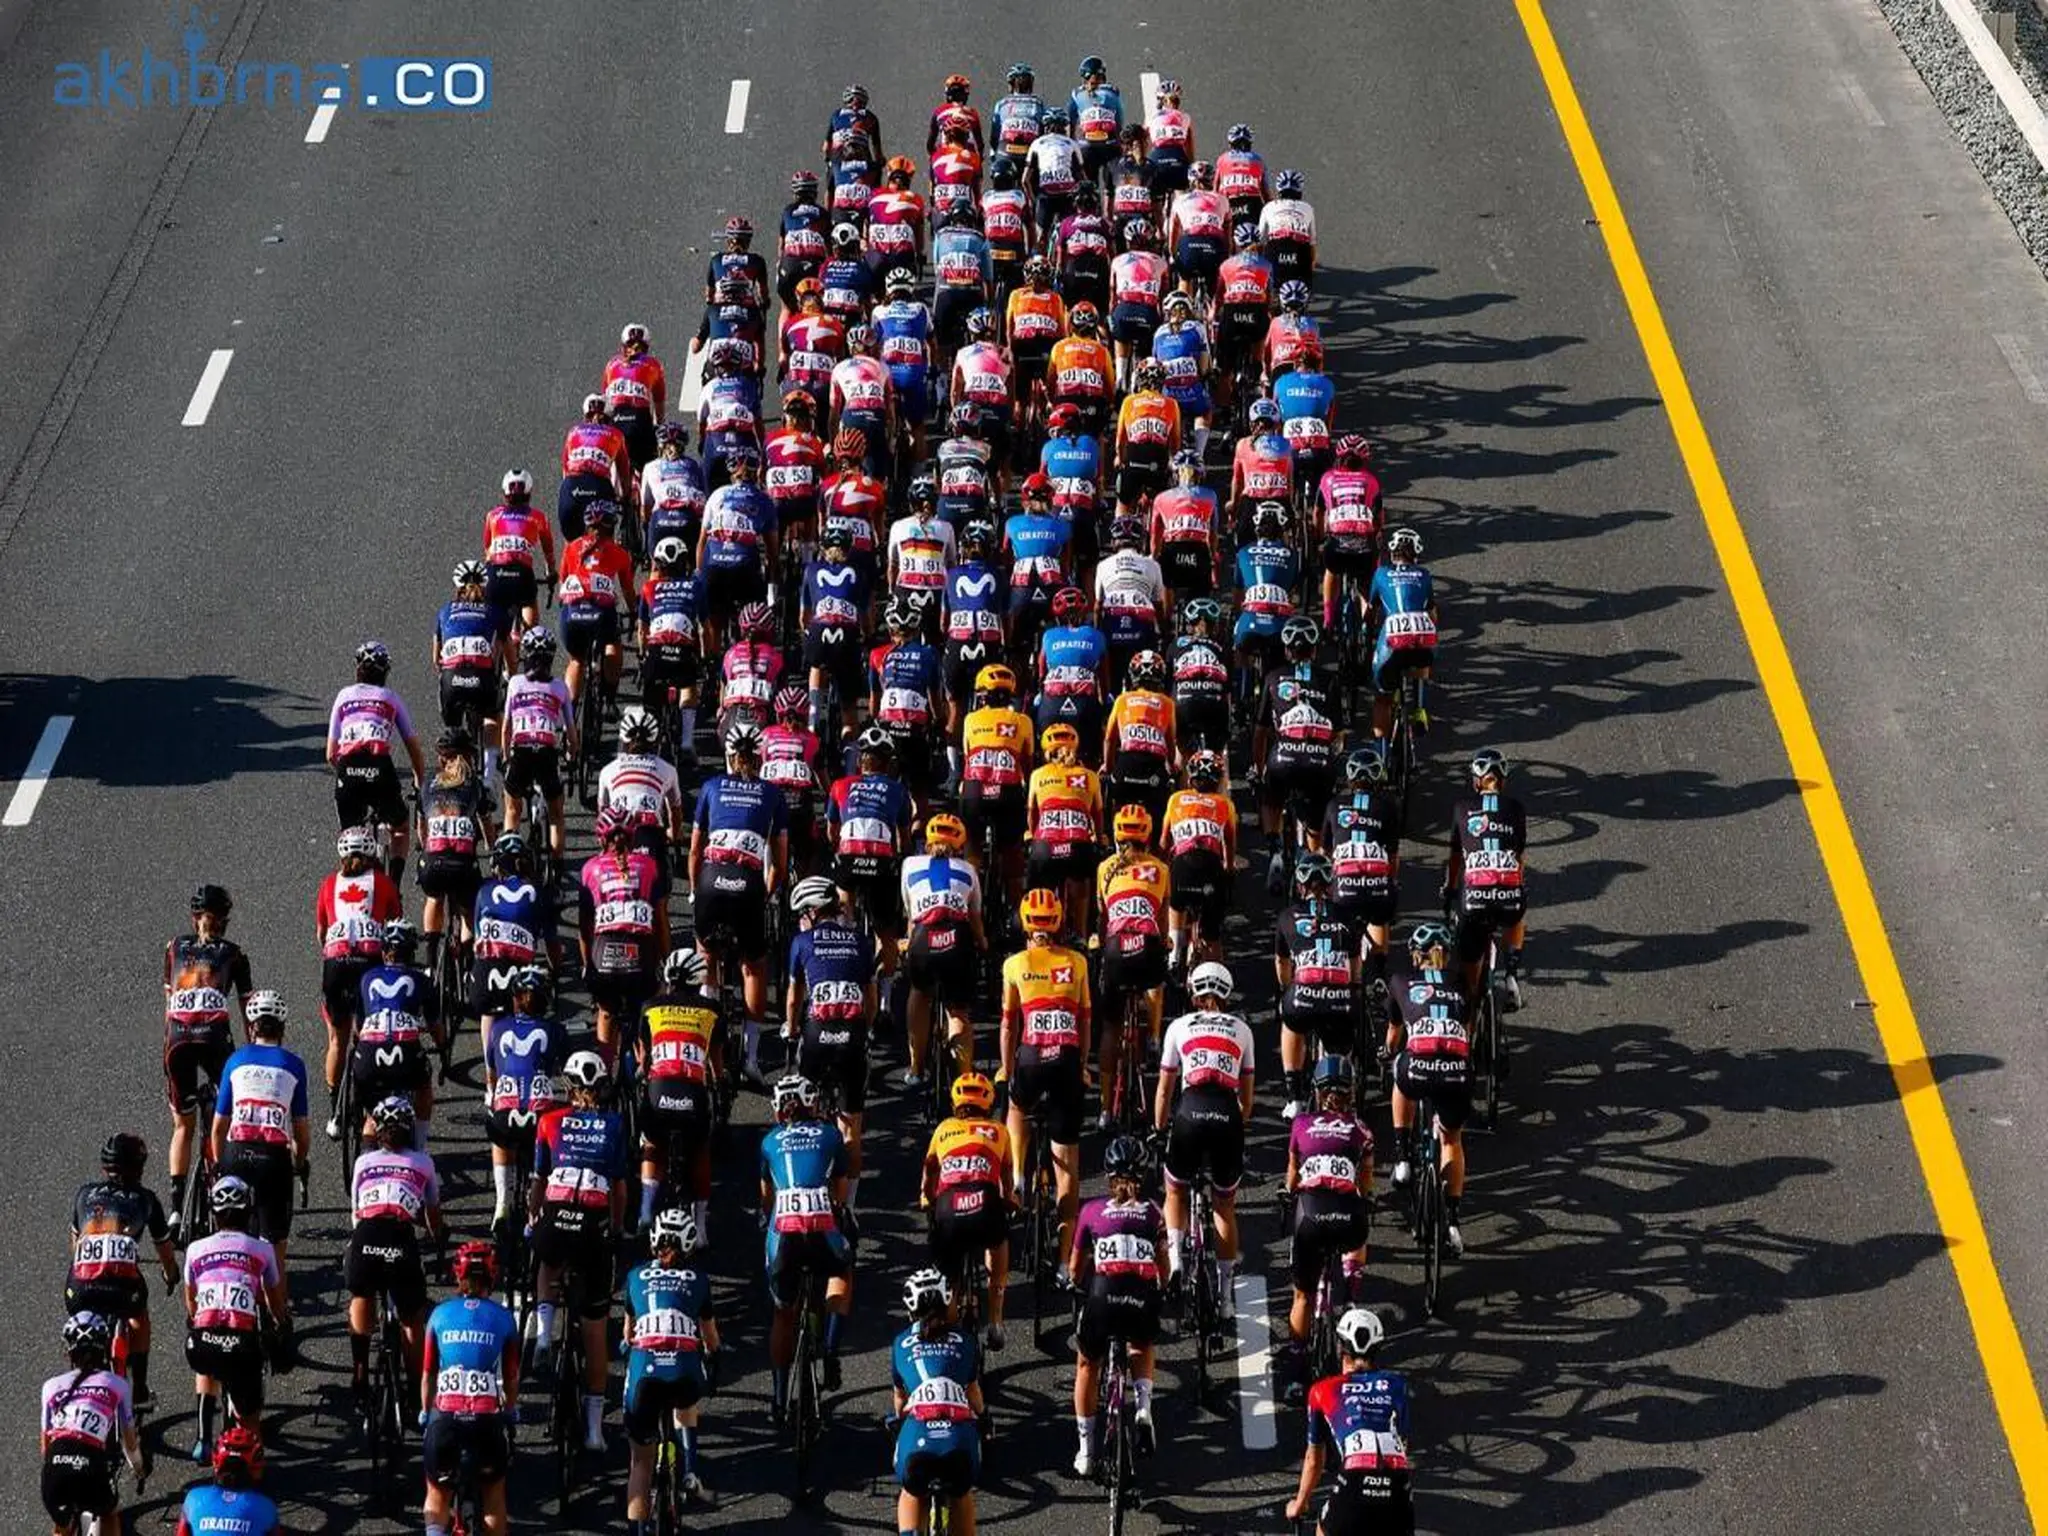 Dubai announces Temporary Suspensions on some roads for UAE Cycling Tour Event